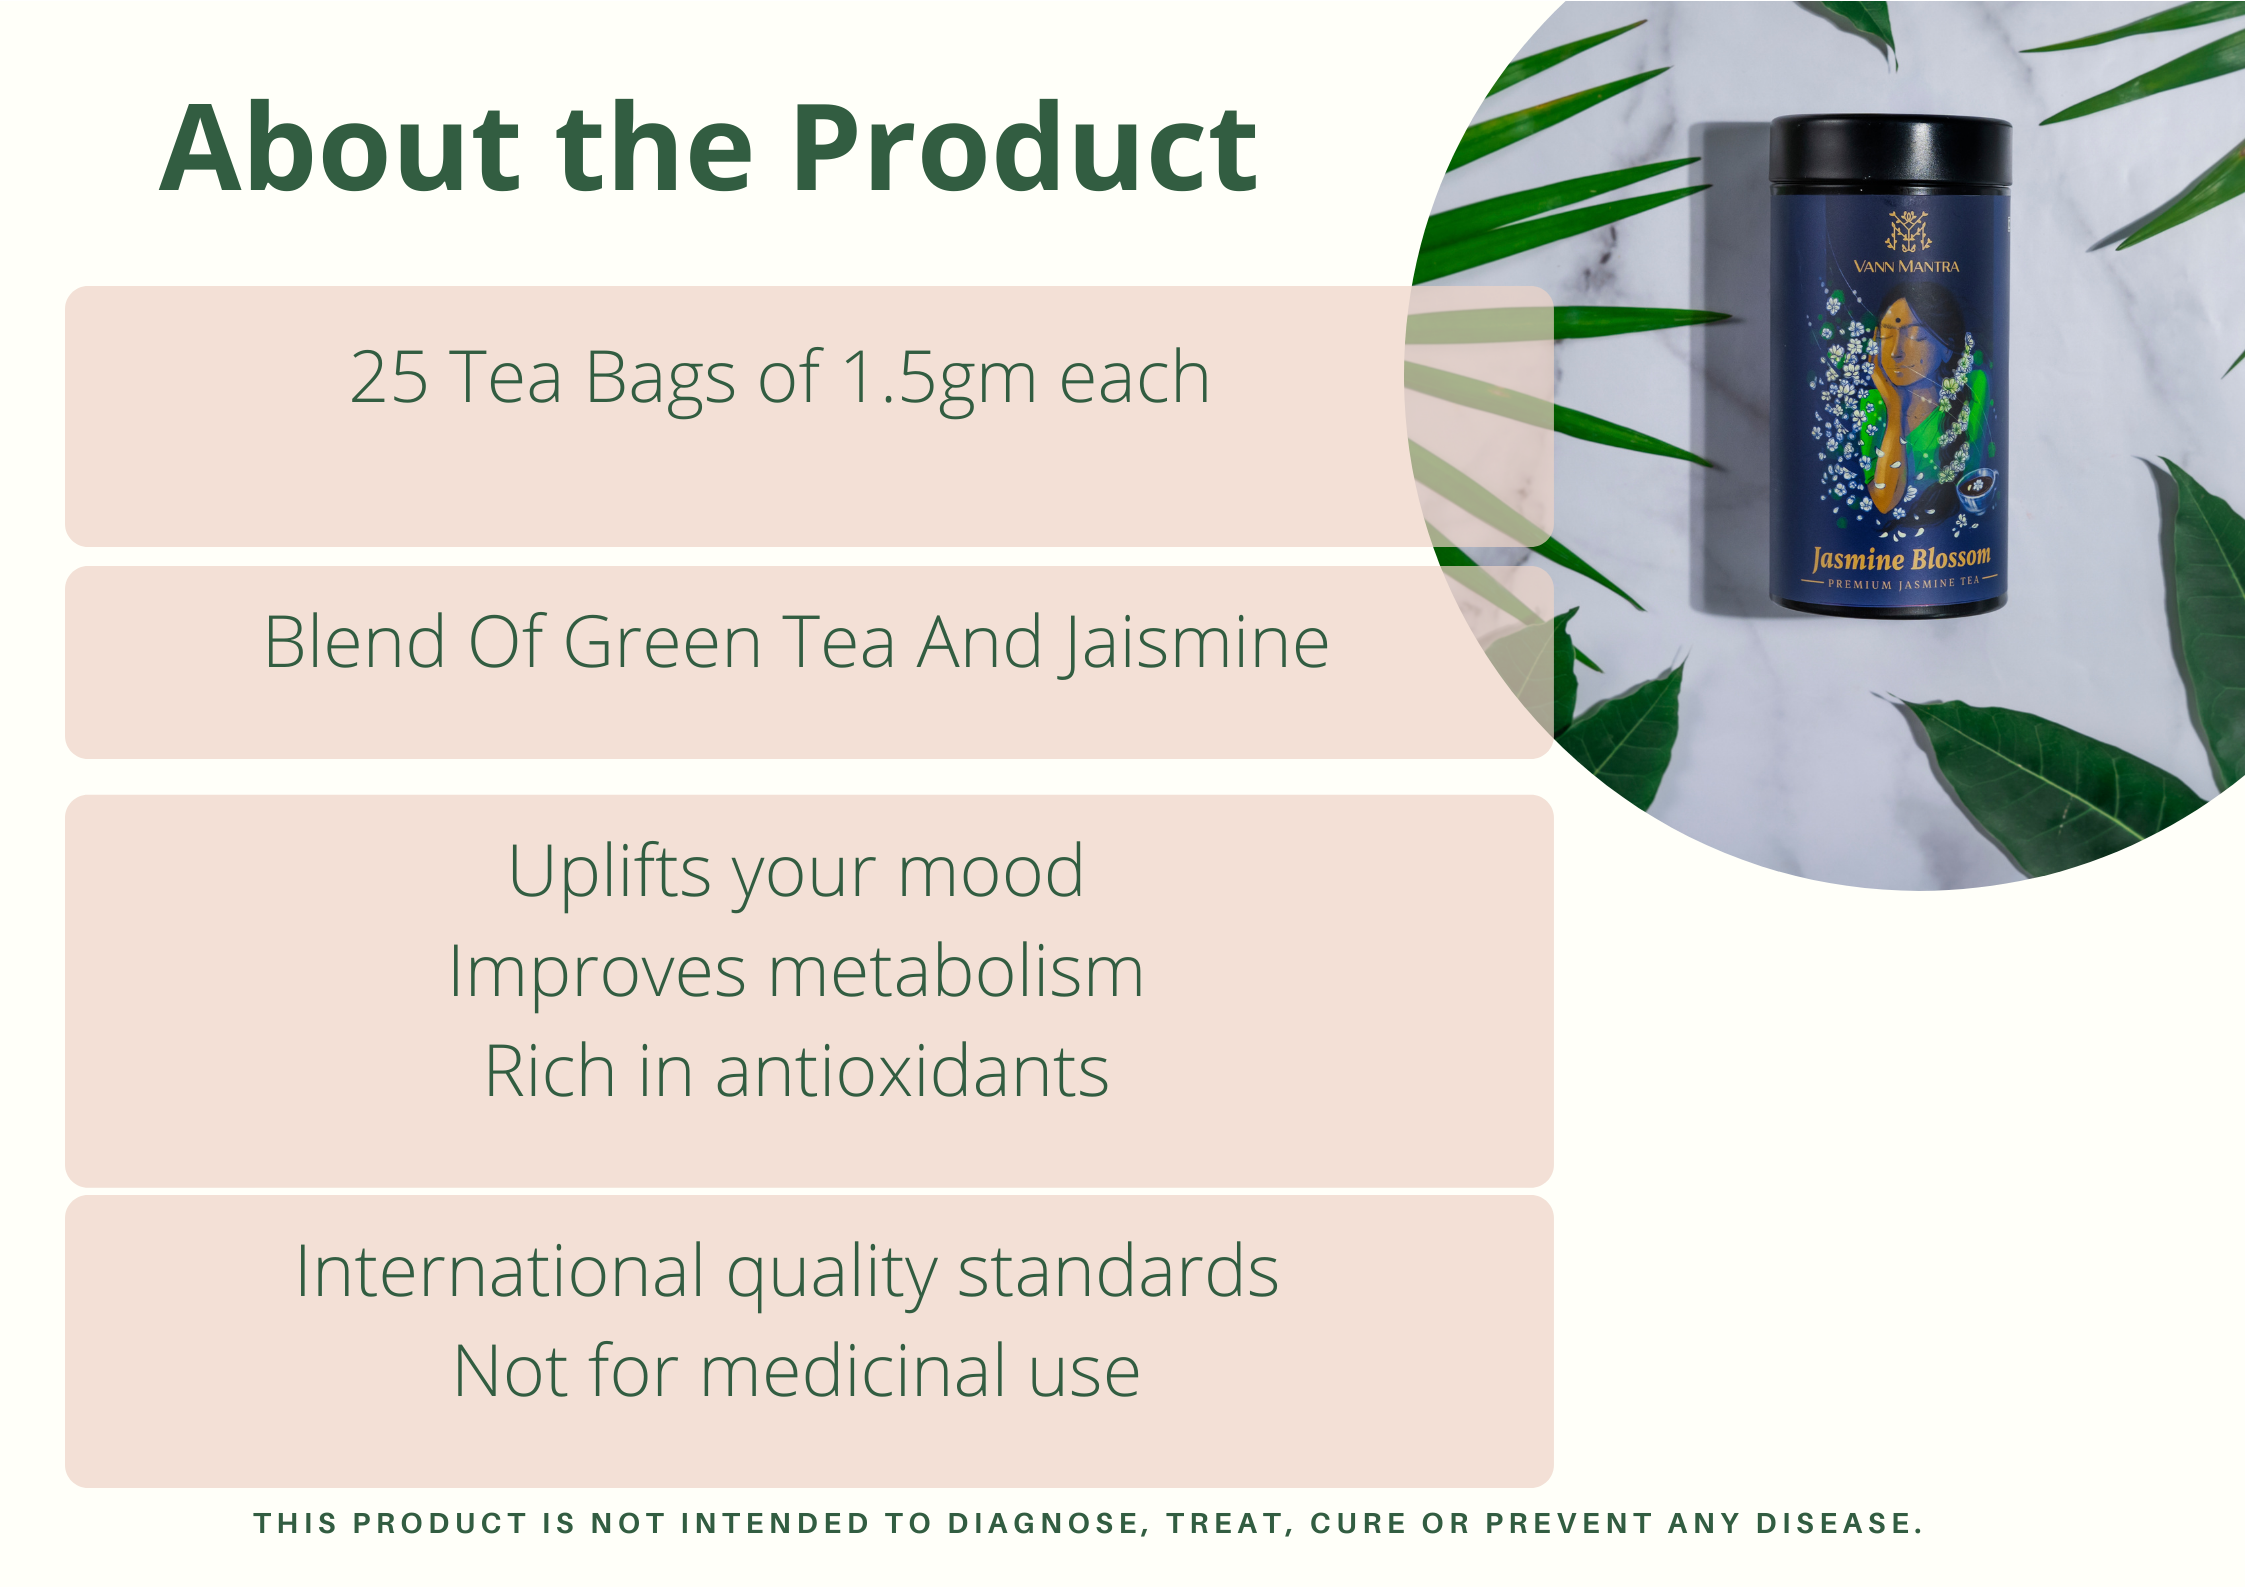 Infographic explaining the features and benefits of Jasmine Blossom- Premium Jasmine Tea.